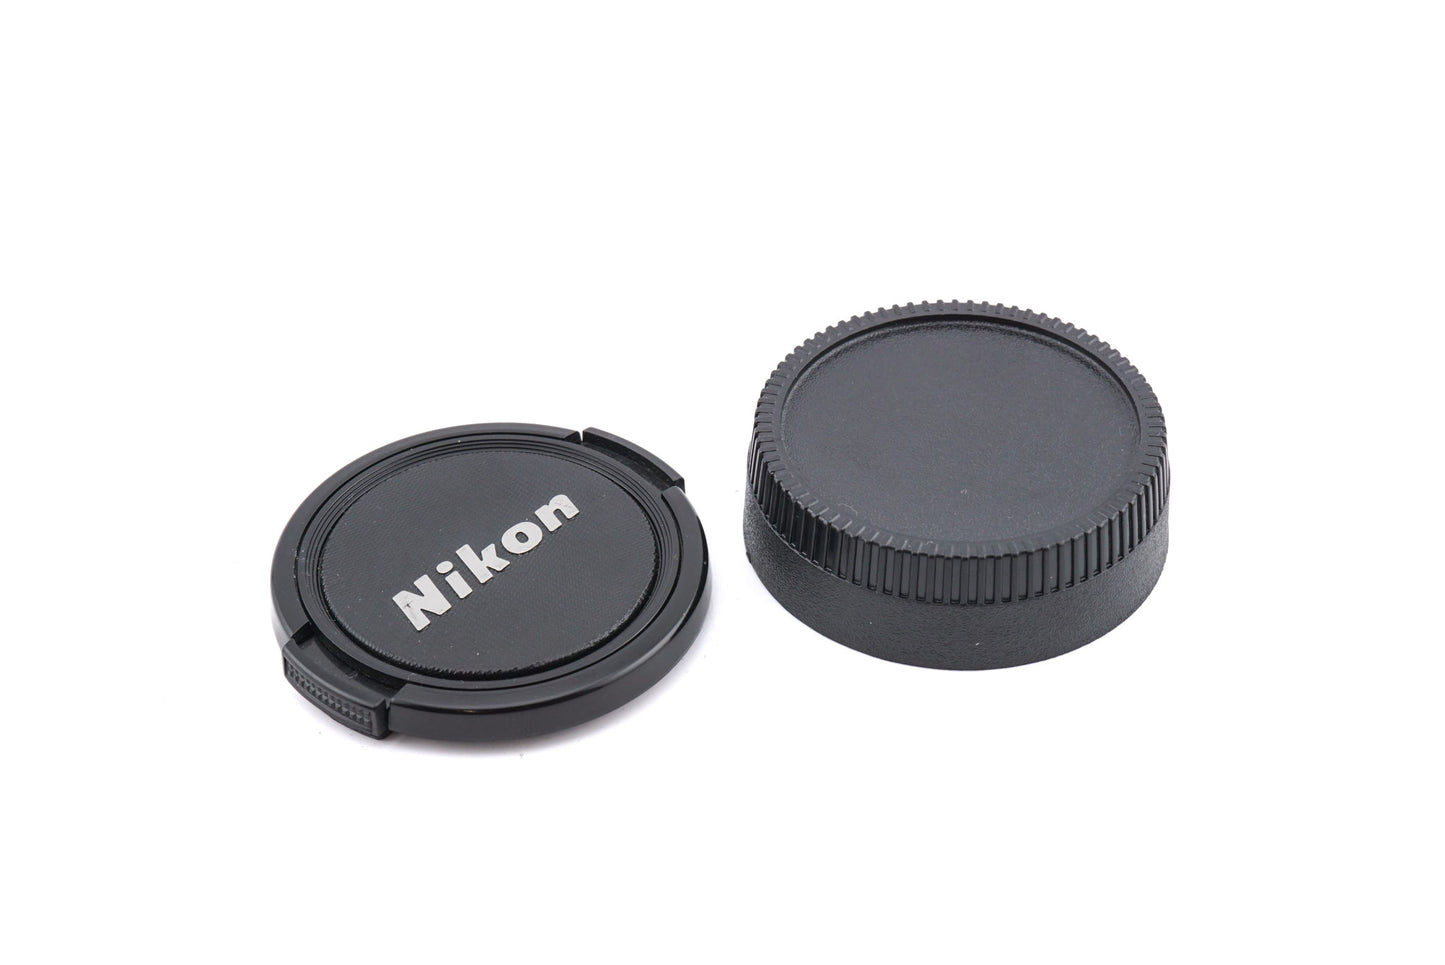 Nikon 58mm f1.2 Noct-Nikkor AI